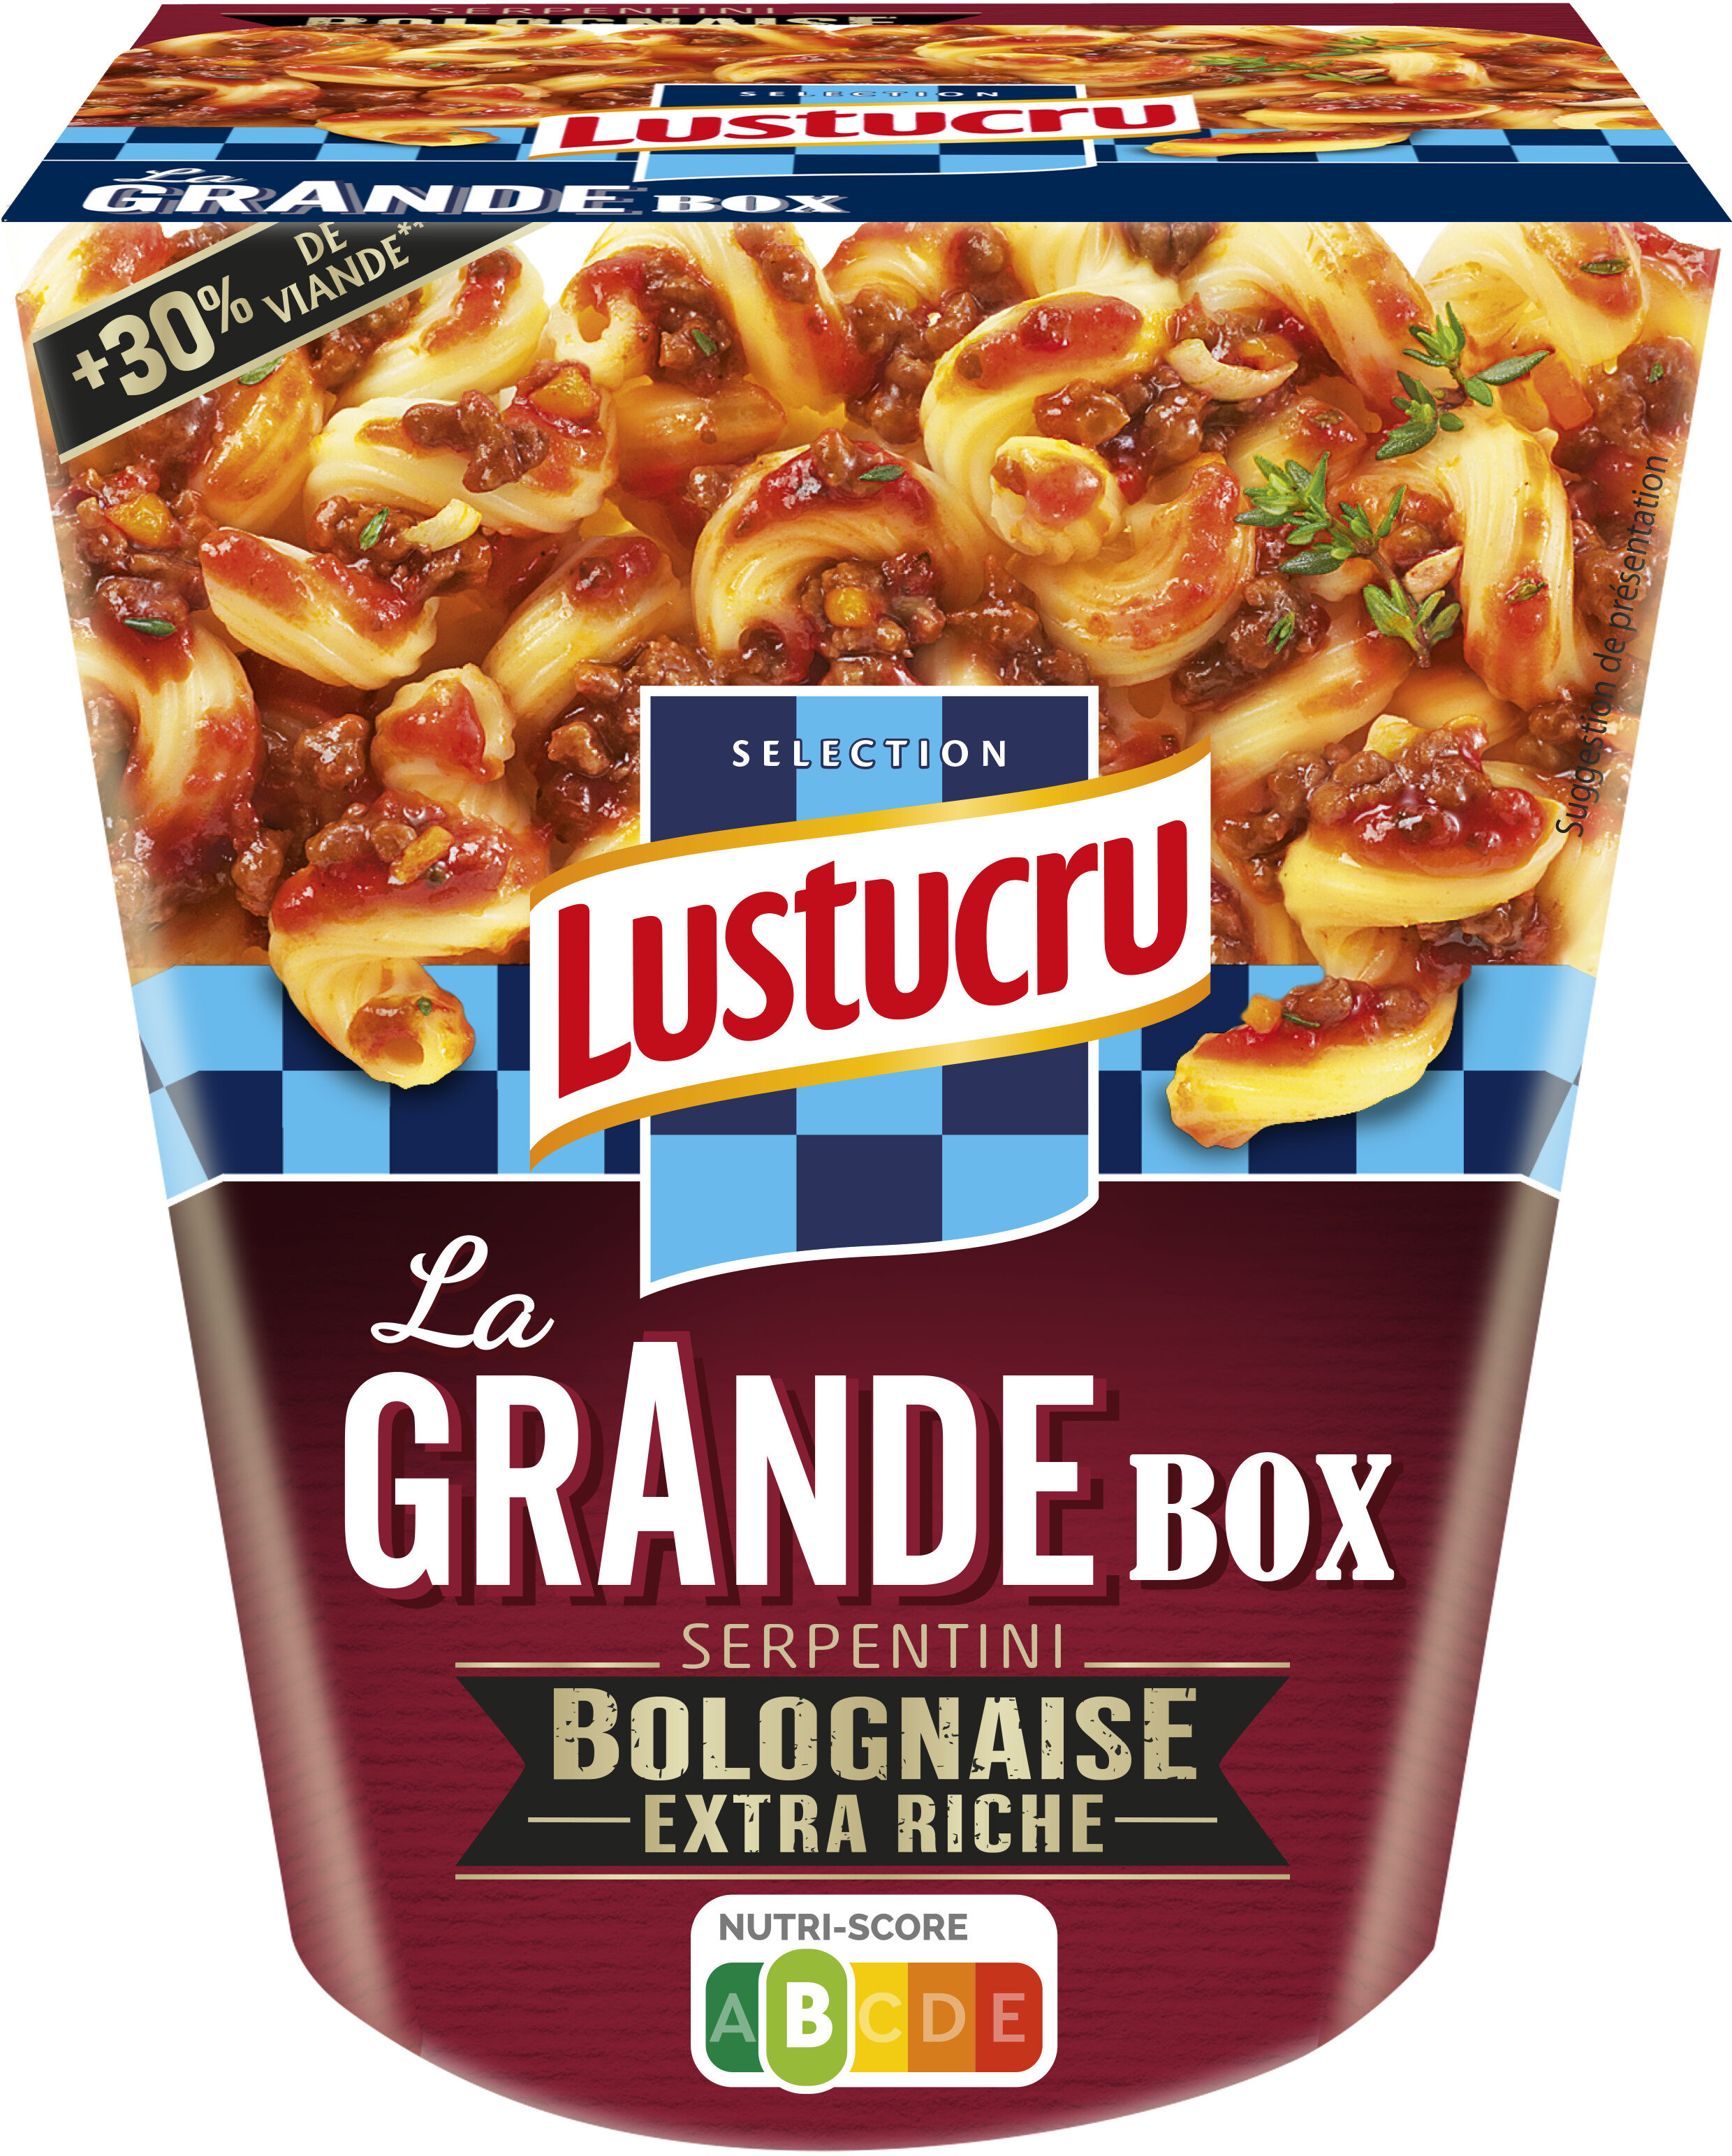 Lustucru box boeuf extra riche 360g - Product - fr